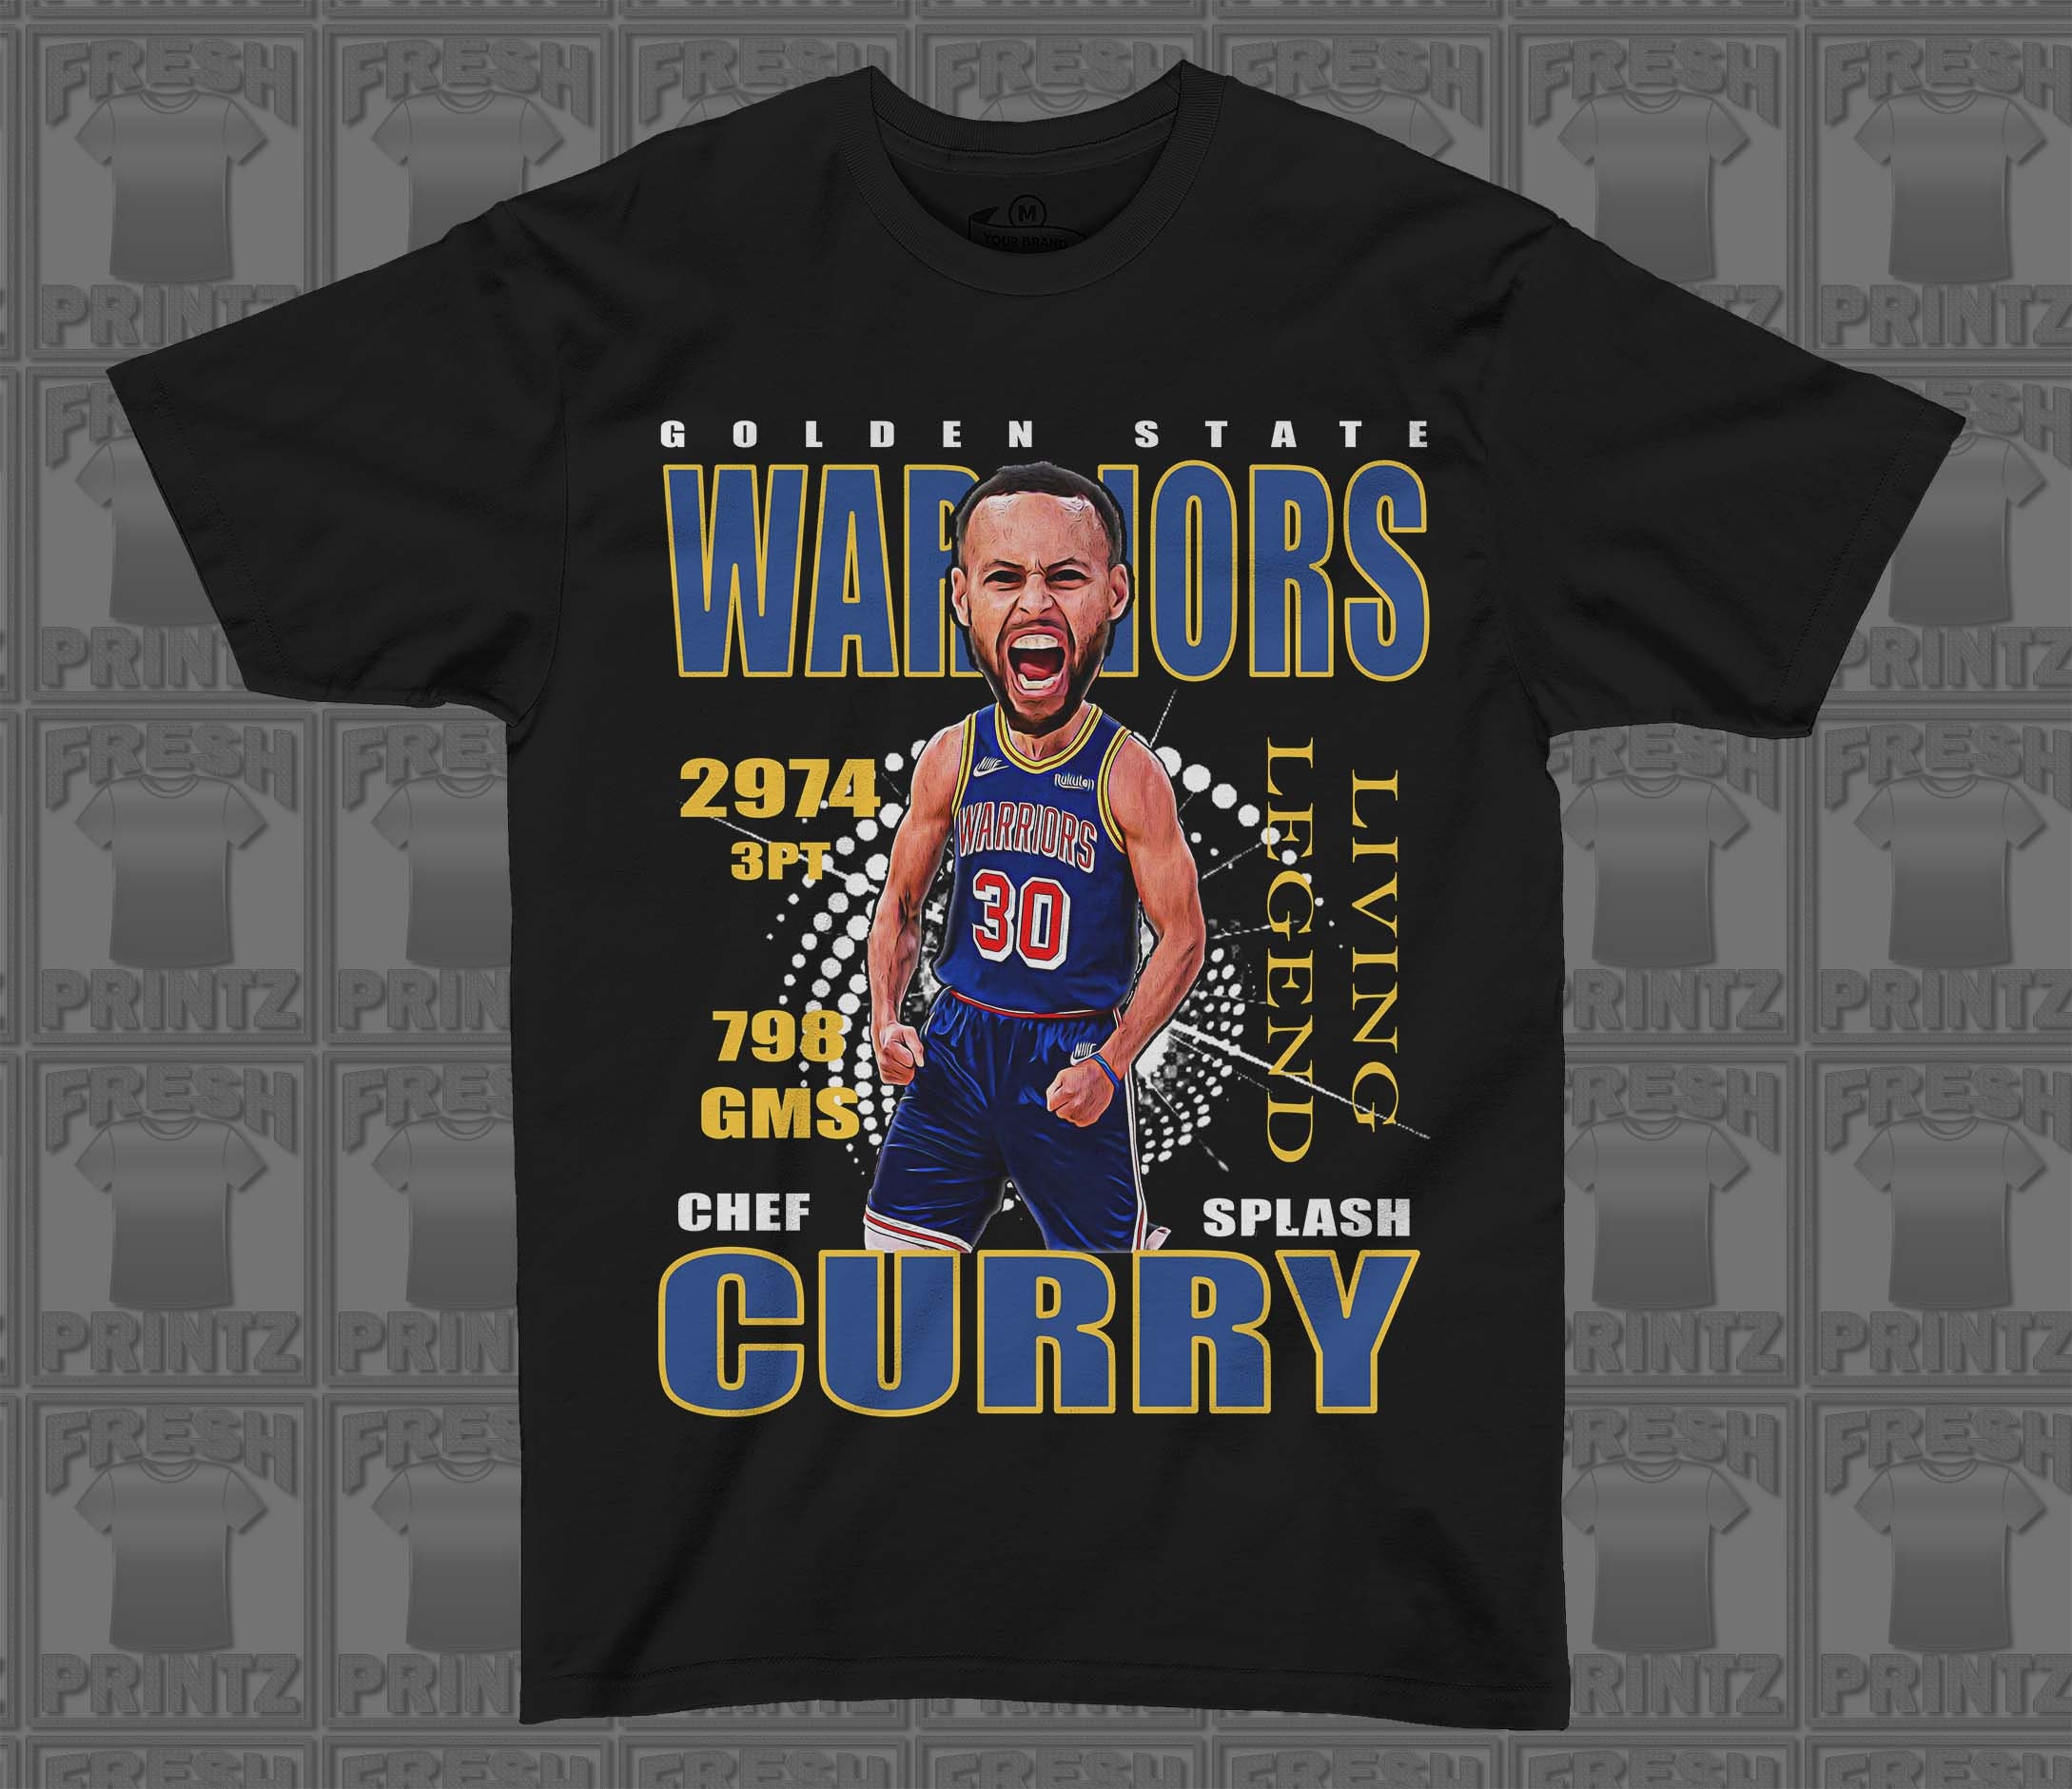 Stephen Curry Golden State Warriors Caricature Tri-Blend T-Shirt - Royal